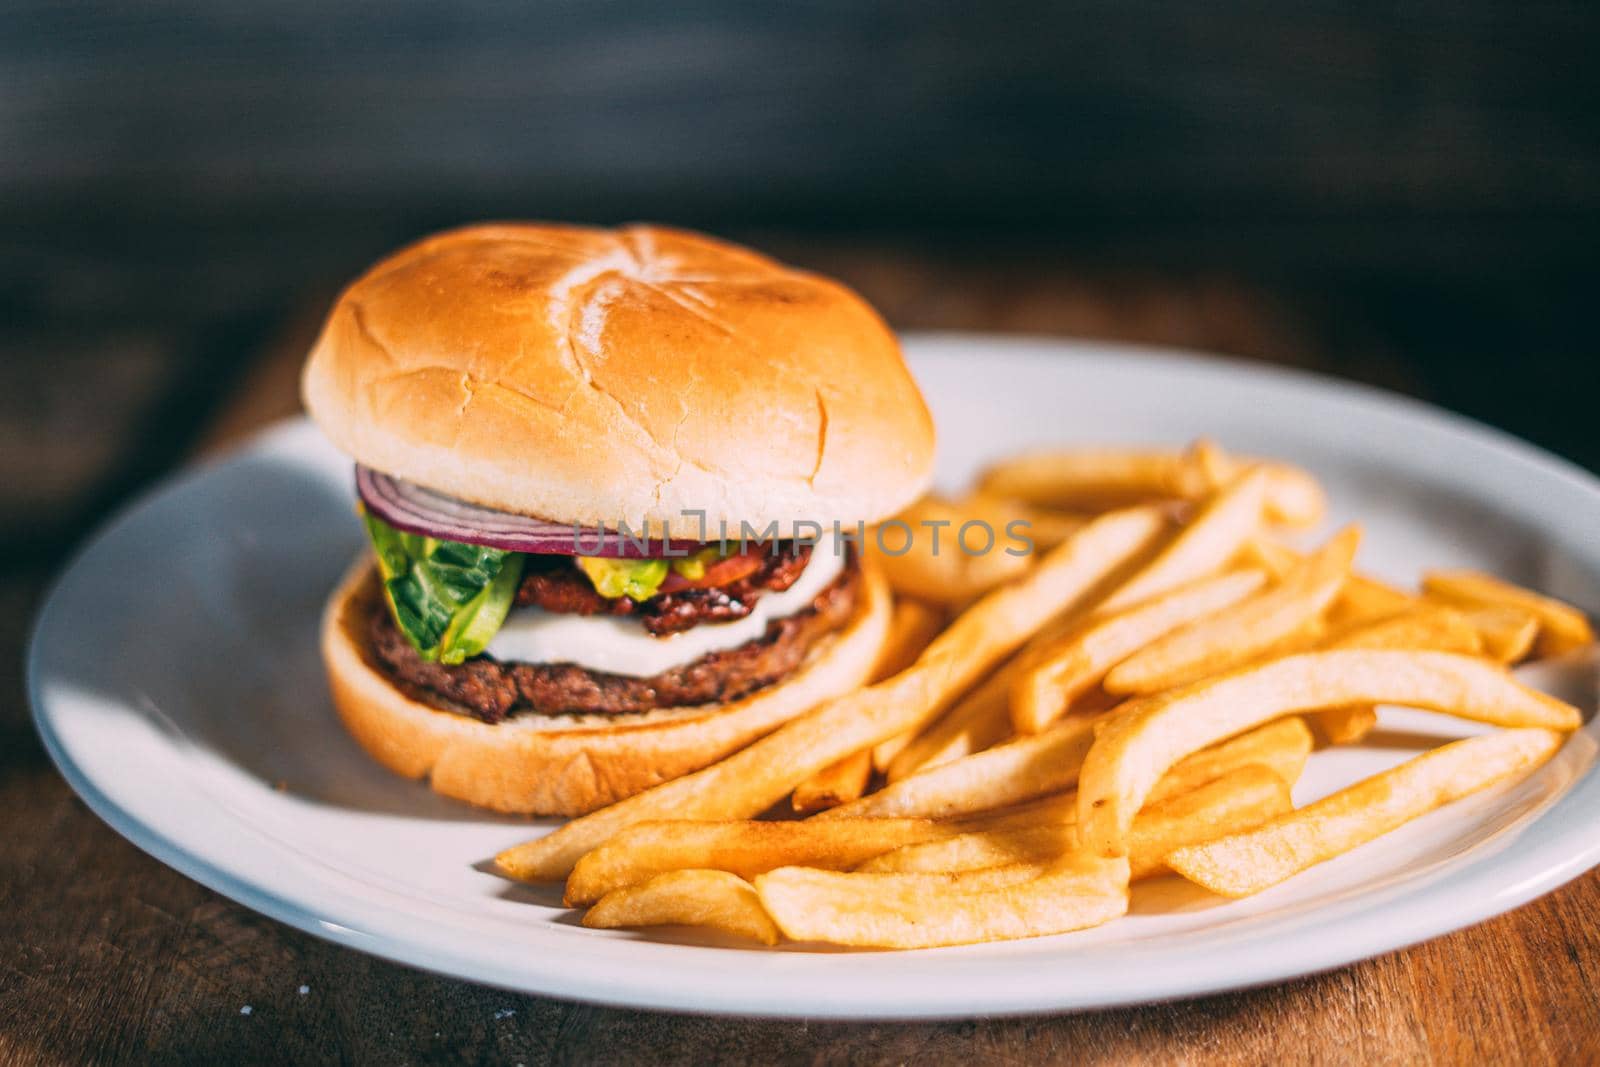 A plate of juicy hamburger and fries